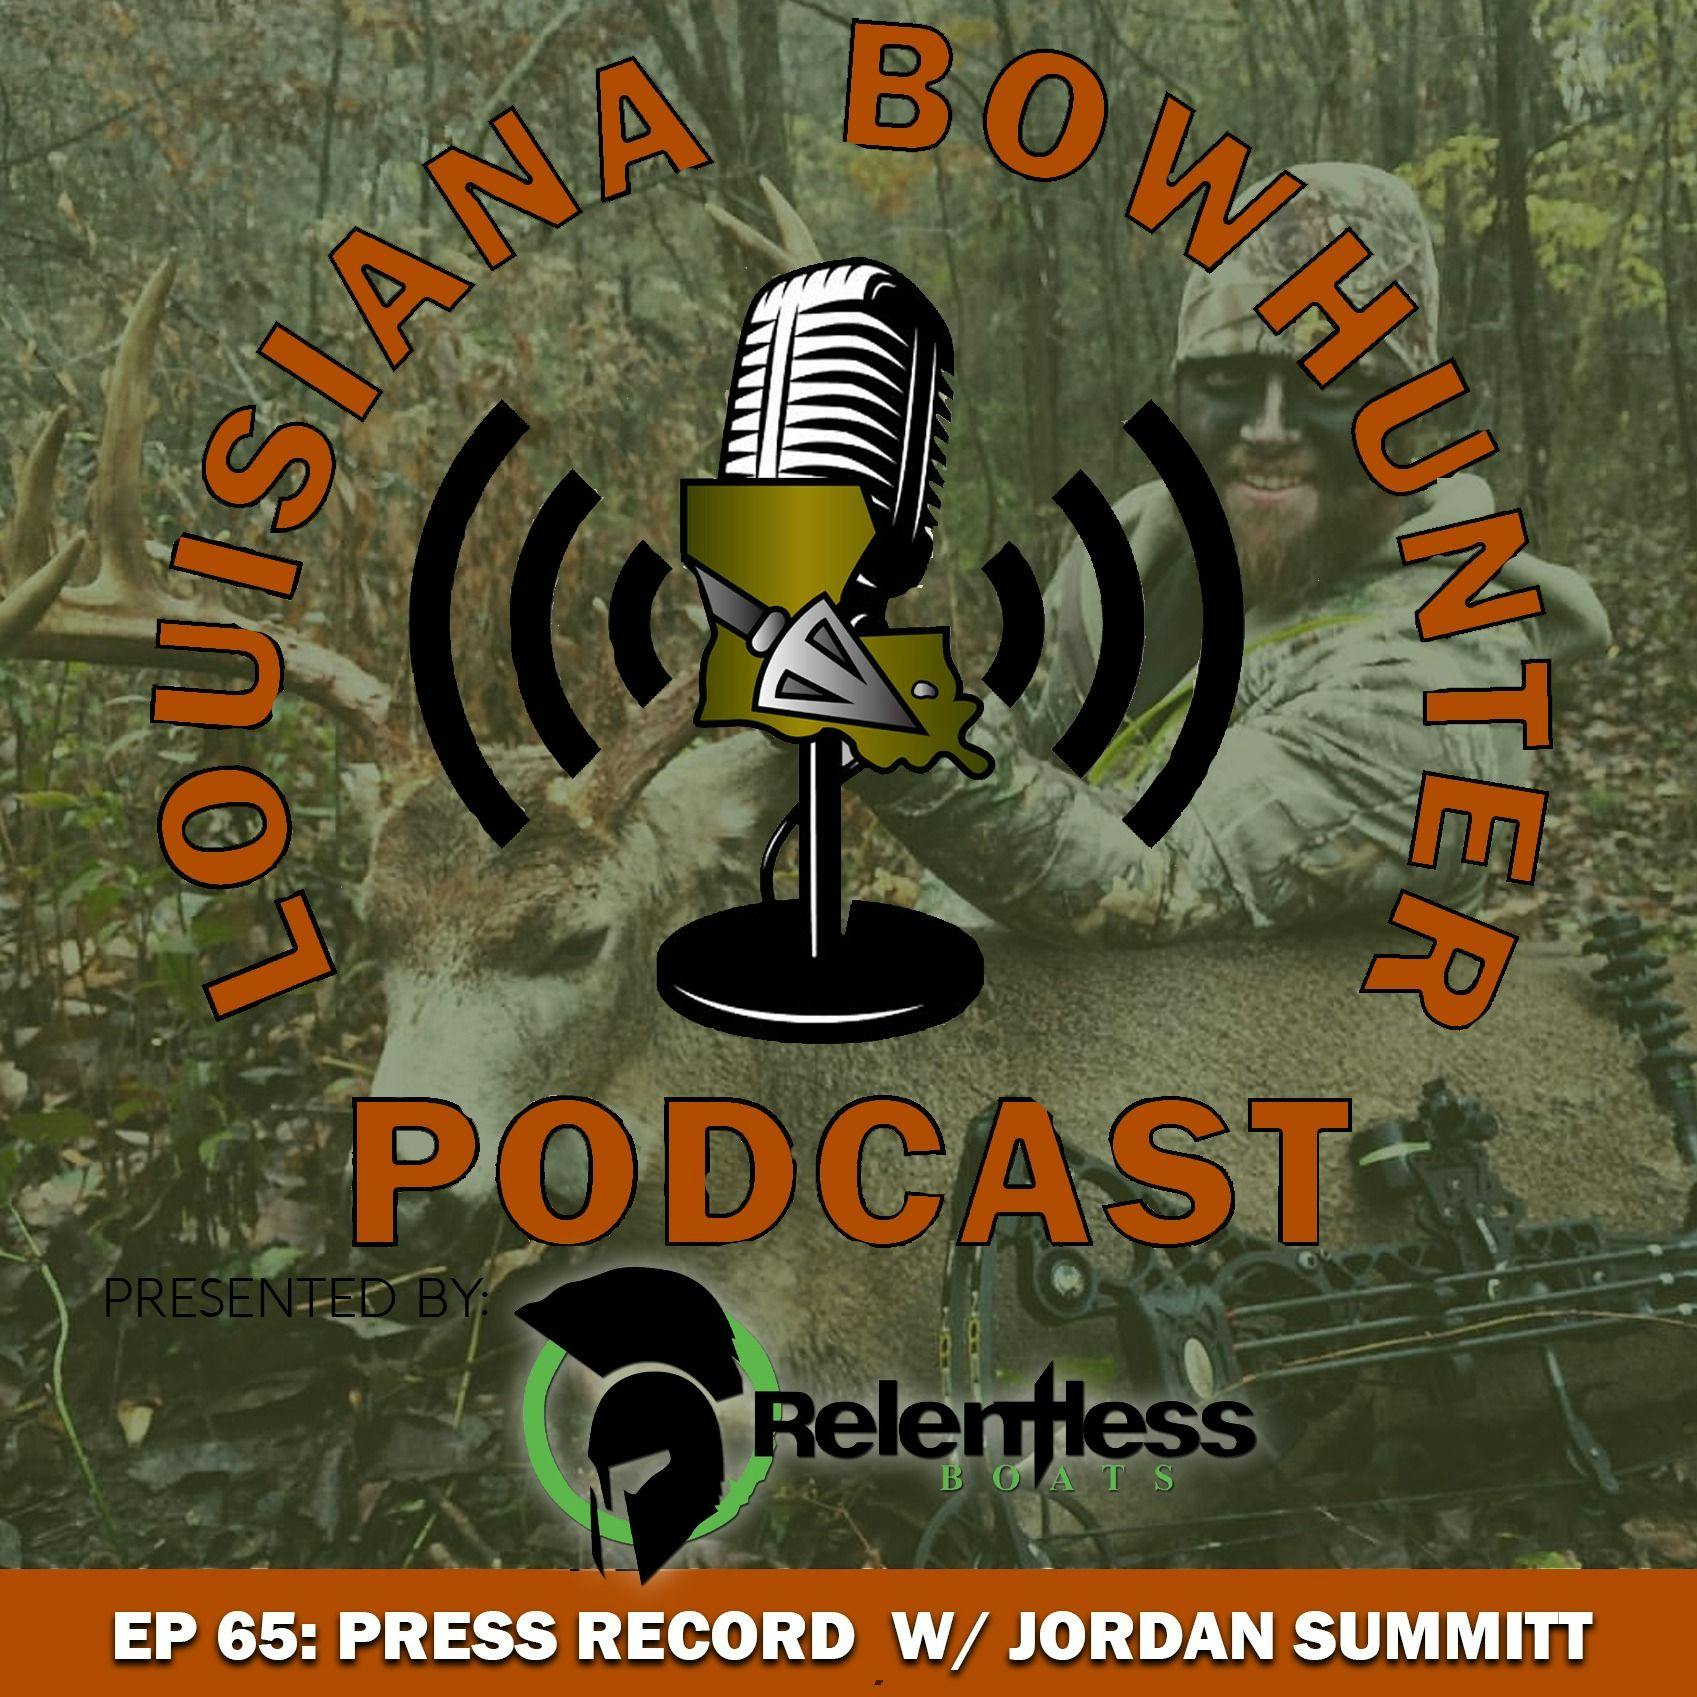 Episode 65: Press Record w/ Jordan Summitt